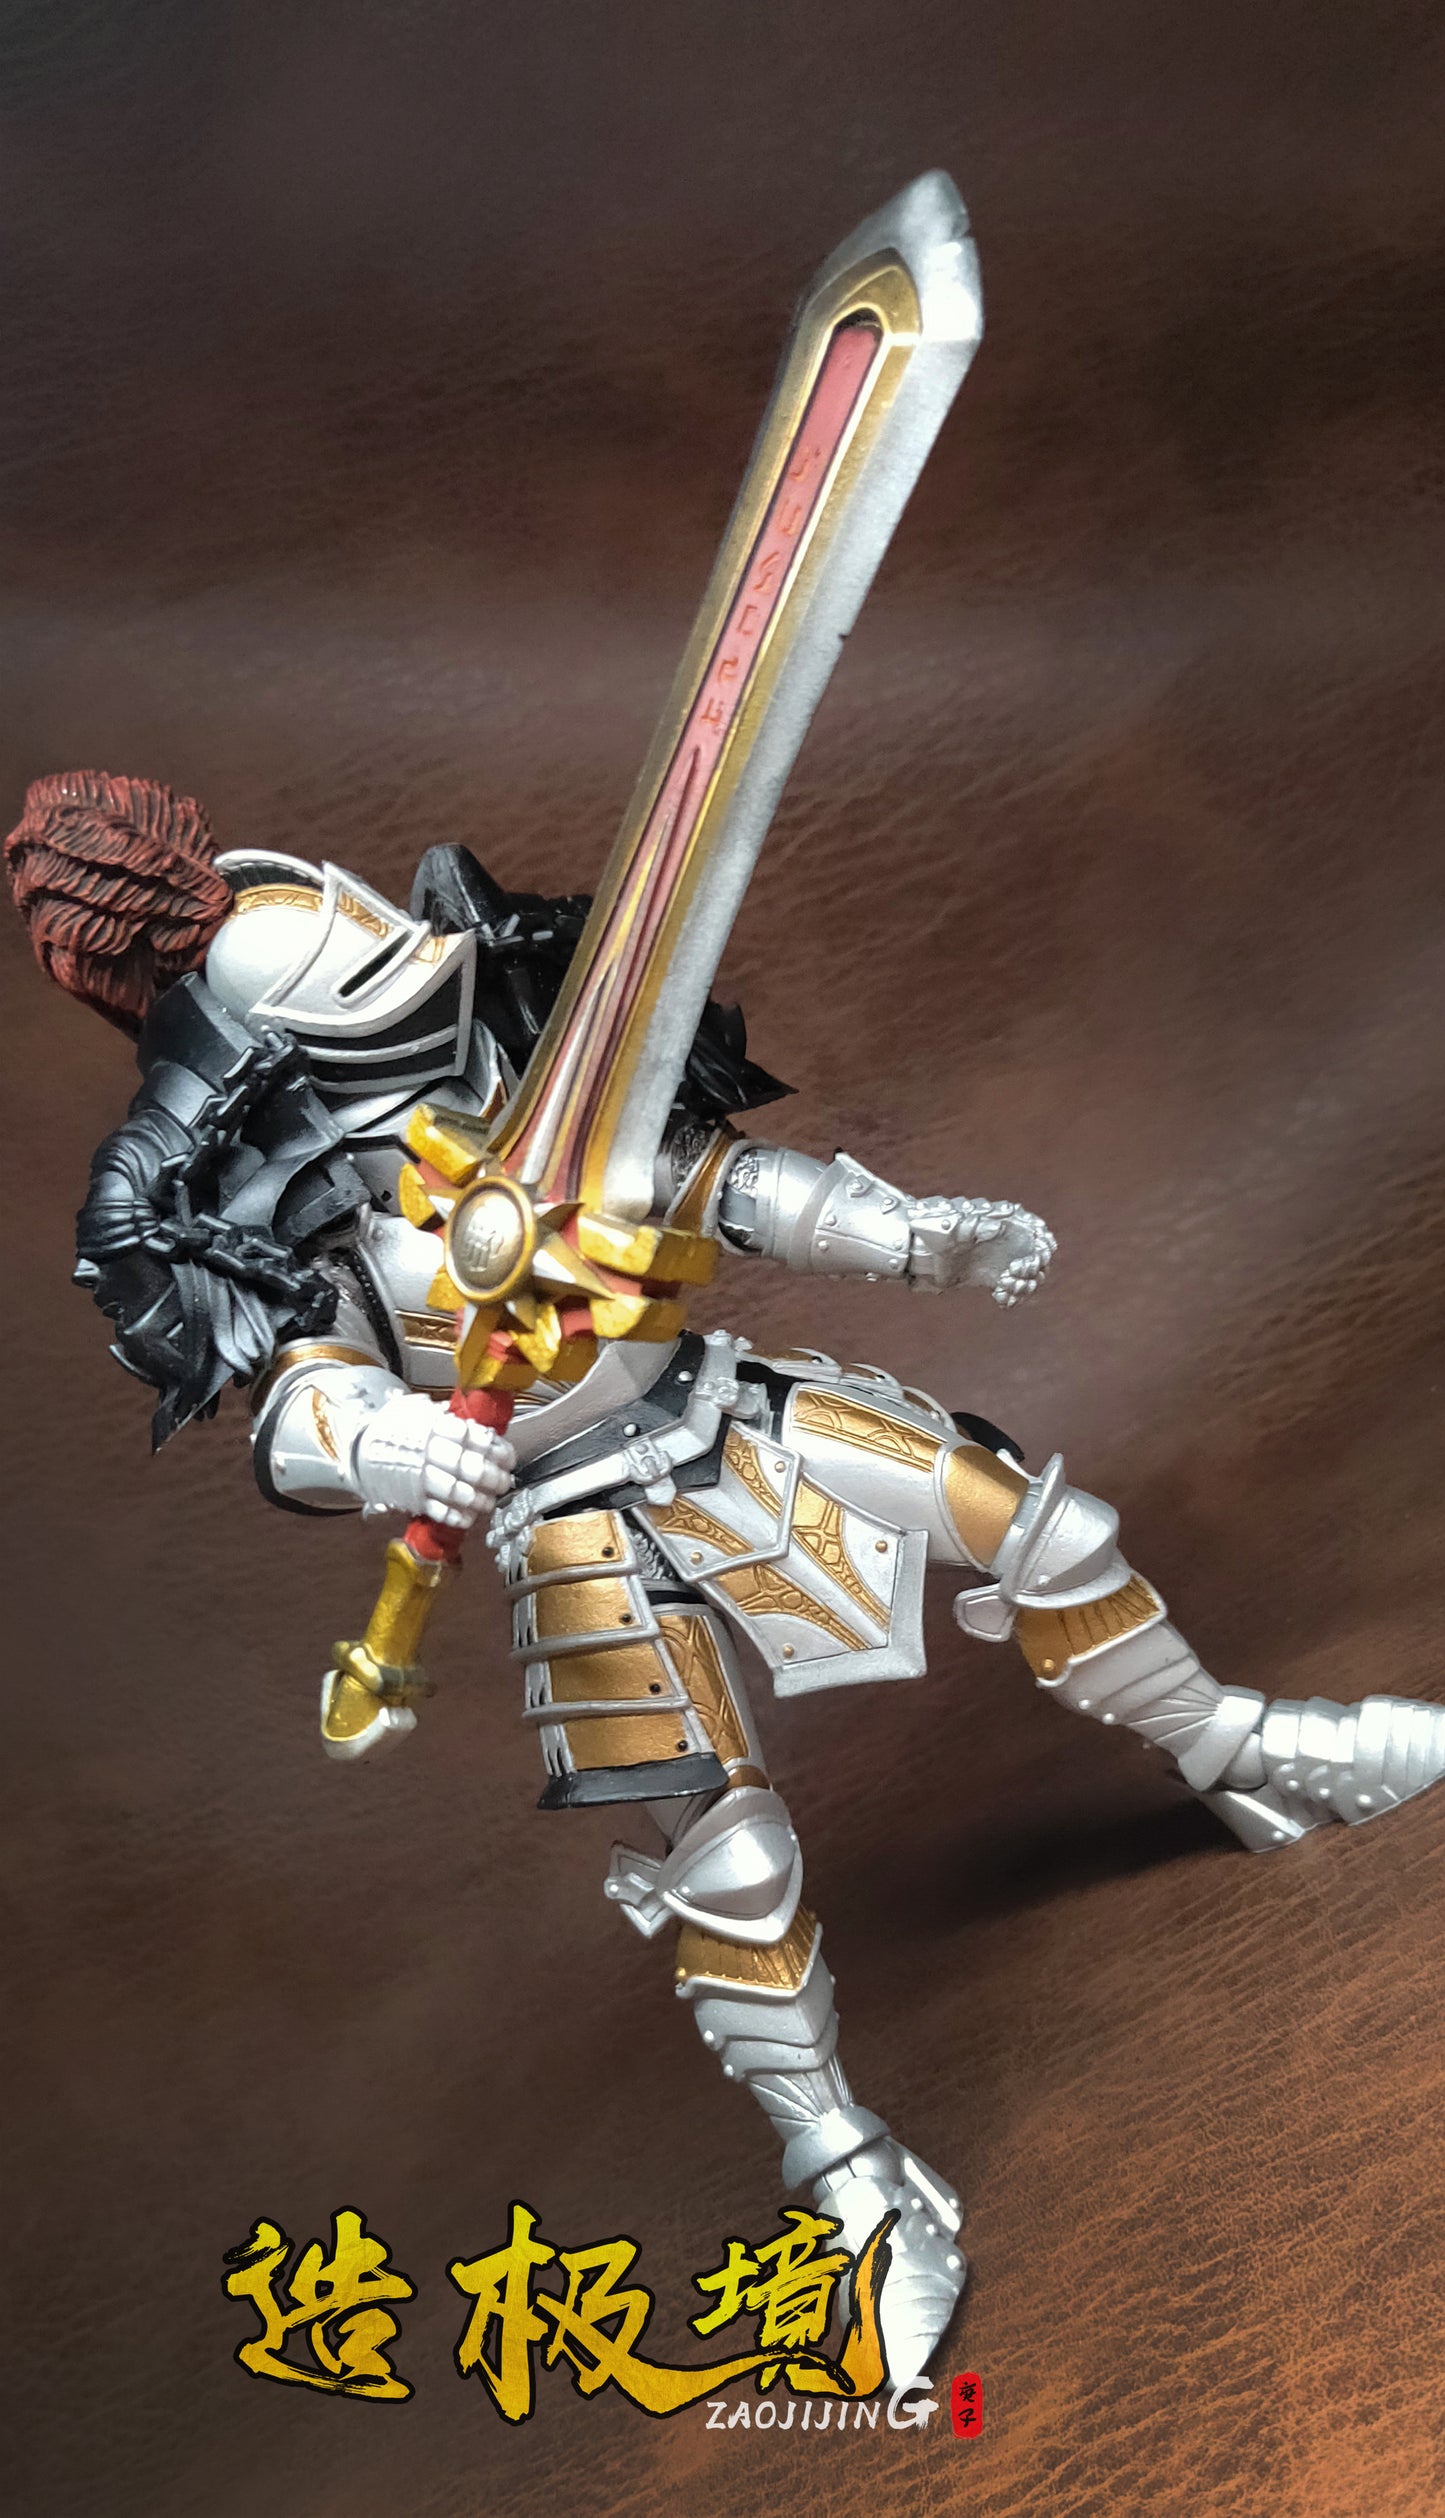 Personalized decoration  Paladin Shoulder armor